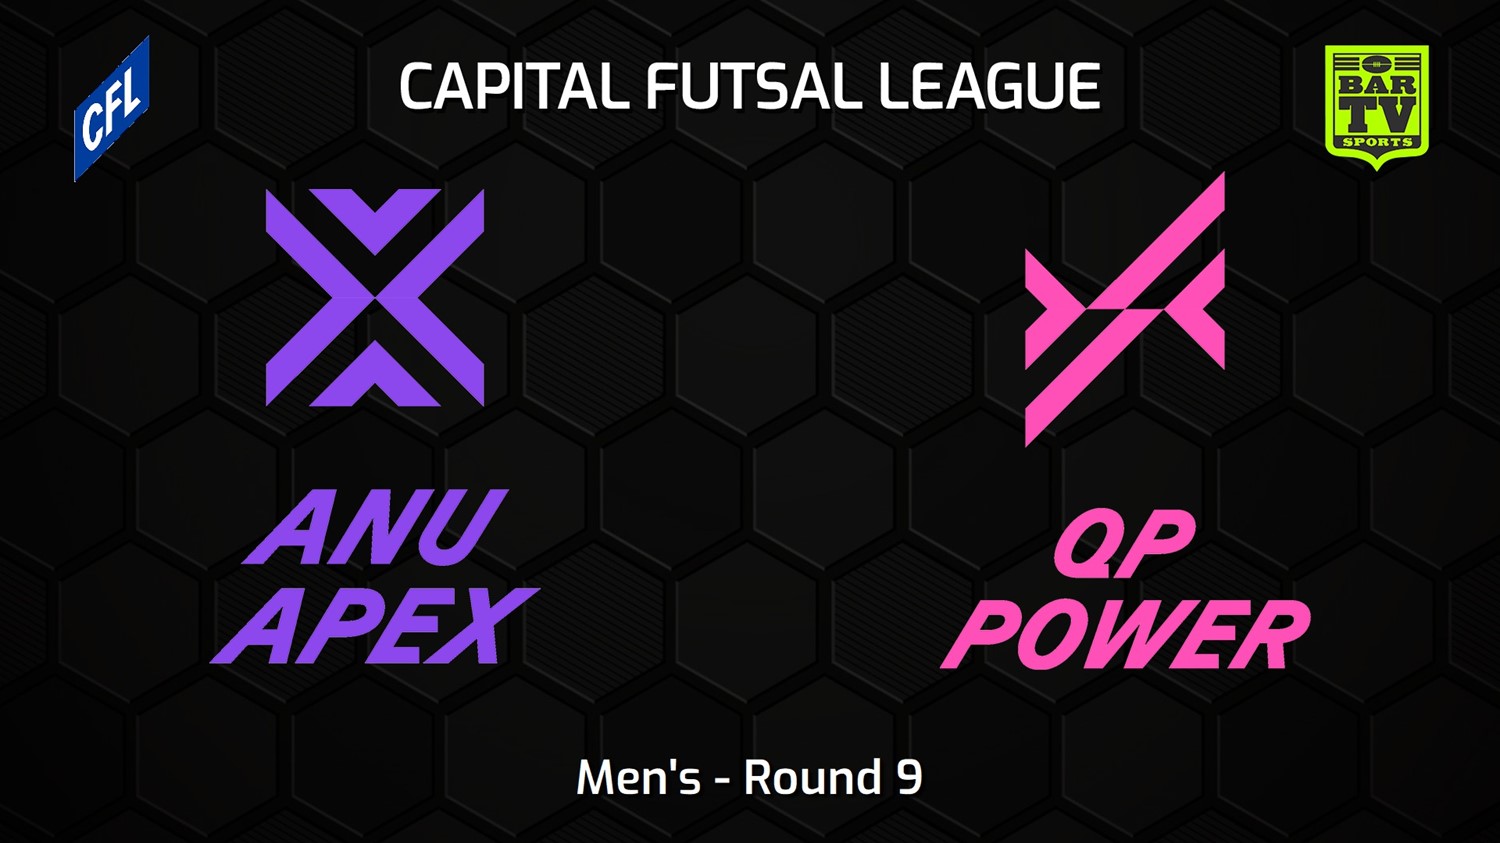 231216-Capital Football Futsal Round 9 - Men's - ANU Apex v Queanbeyan-Palerang Power Minigame Slate Image